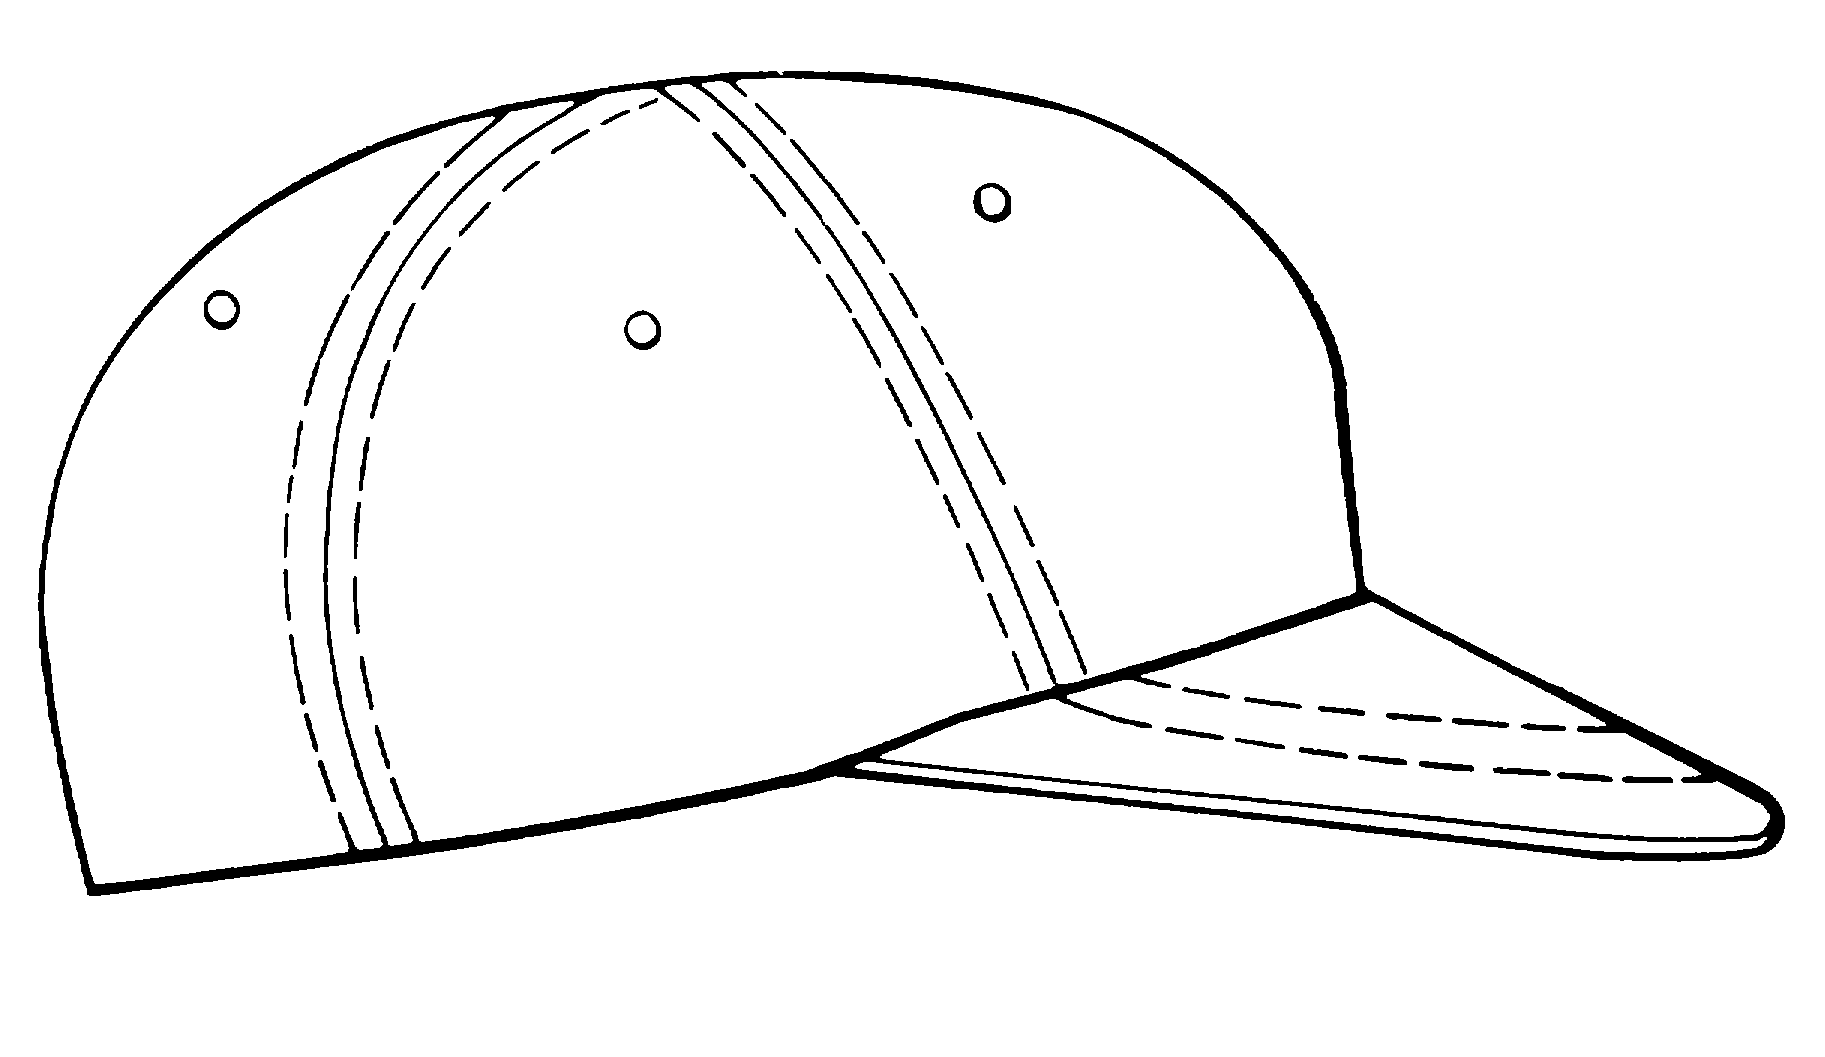 OG-106 hot weather field cap